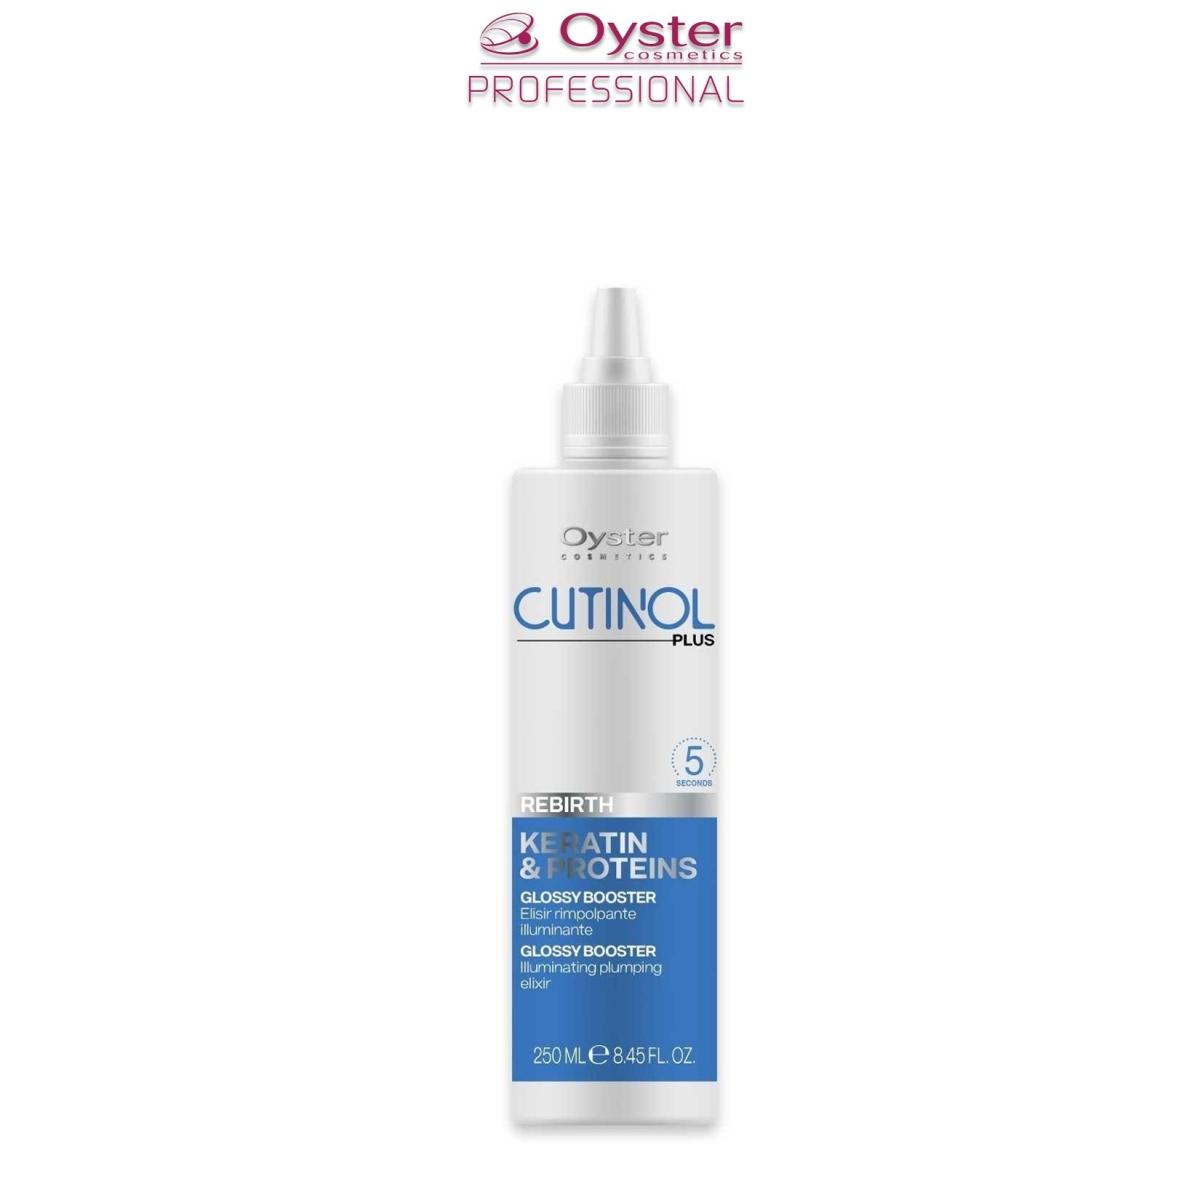 Oyster Cutinol Plus Keratin ( Glossy Booster ) rimpolpante illuminante 250 ml